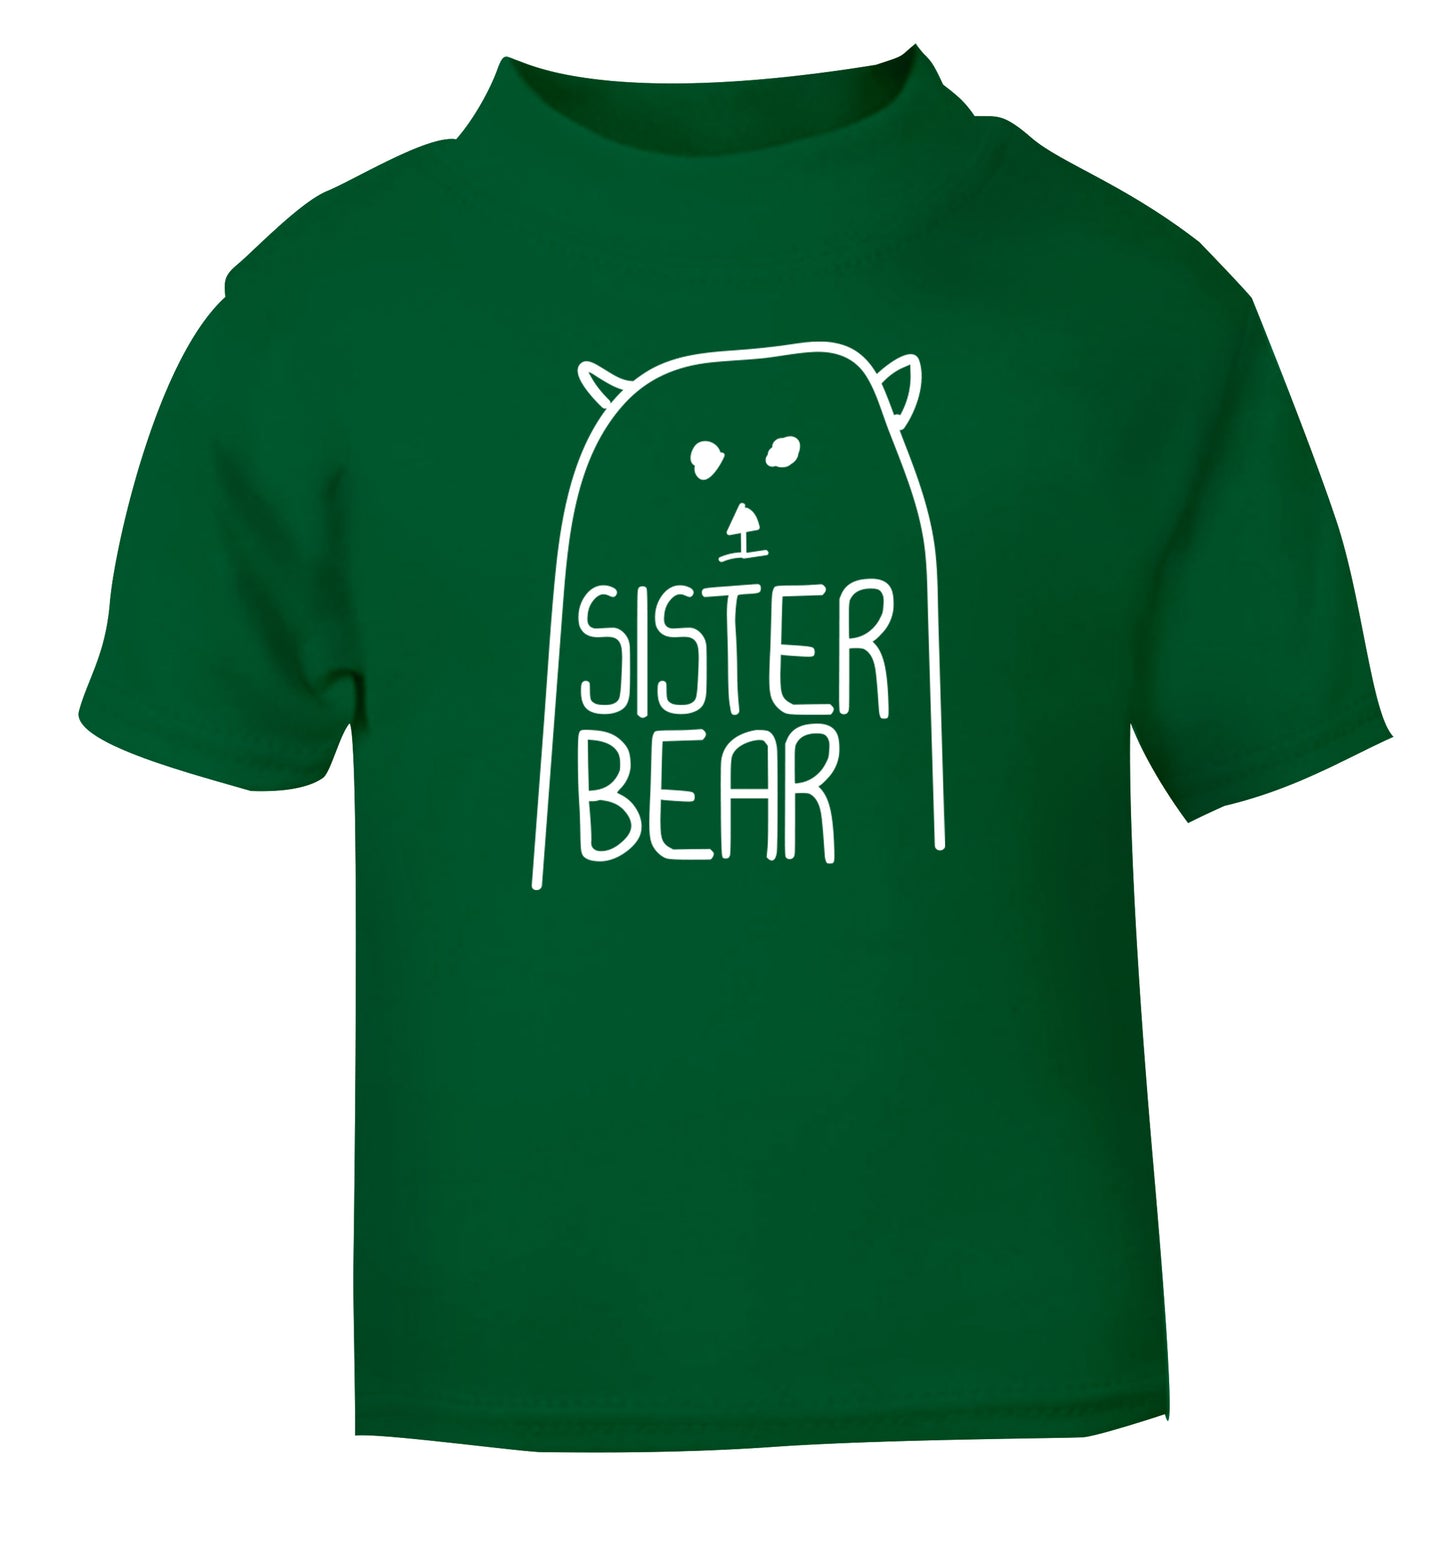 Sister bear green Baby Toddler Tshirt 2 Years